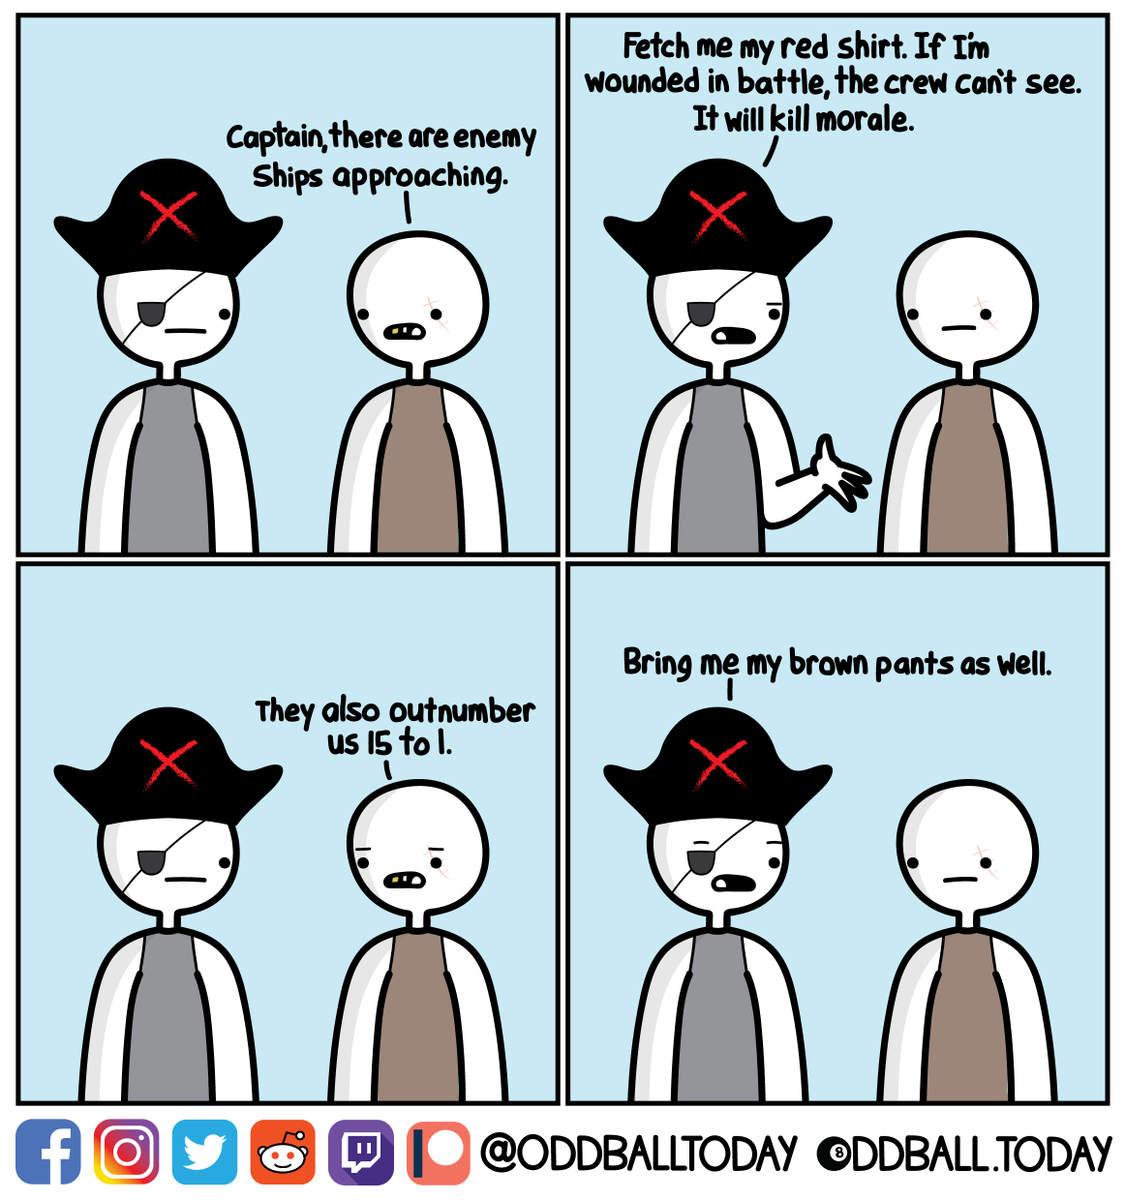 Comic #402 - Pirates

oddball.today/comics/comic-4…
.
.
.
.
.
.
.
#comic #comics #webcomic #webcomics #cartoon #art #humor #funny #lol #lols #lmao #pirate #pirates #ship #ships #pirateship #pirateships #enemy #captain #piratecaptain #shirt #red #redshirt